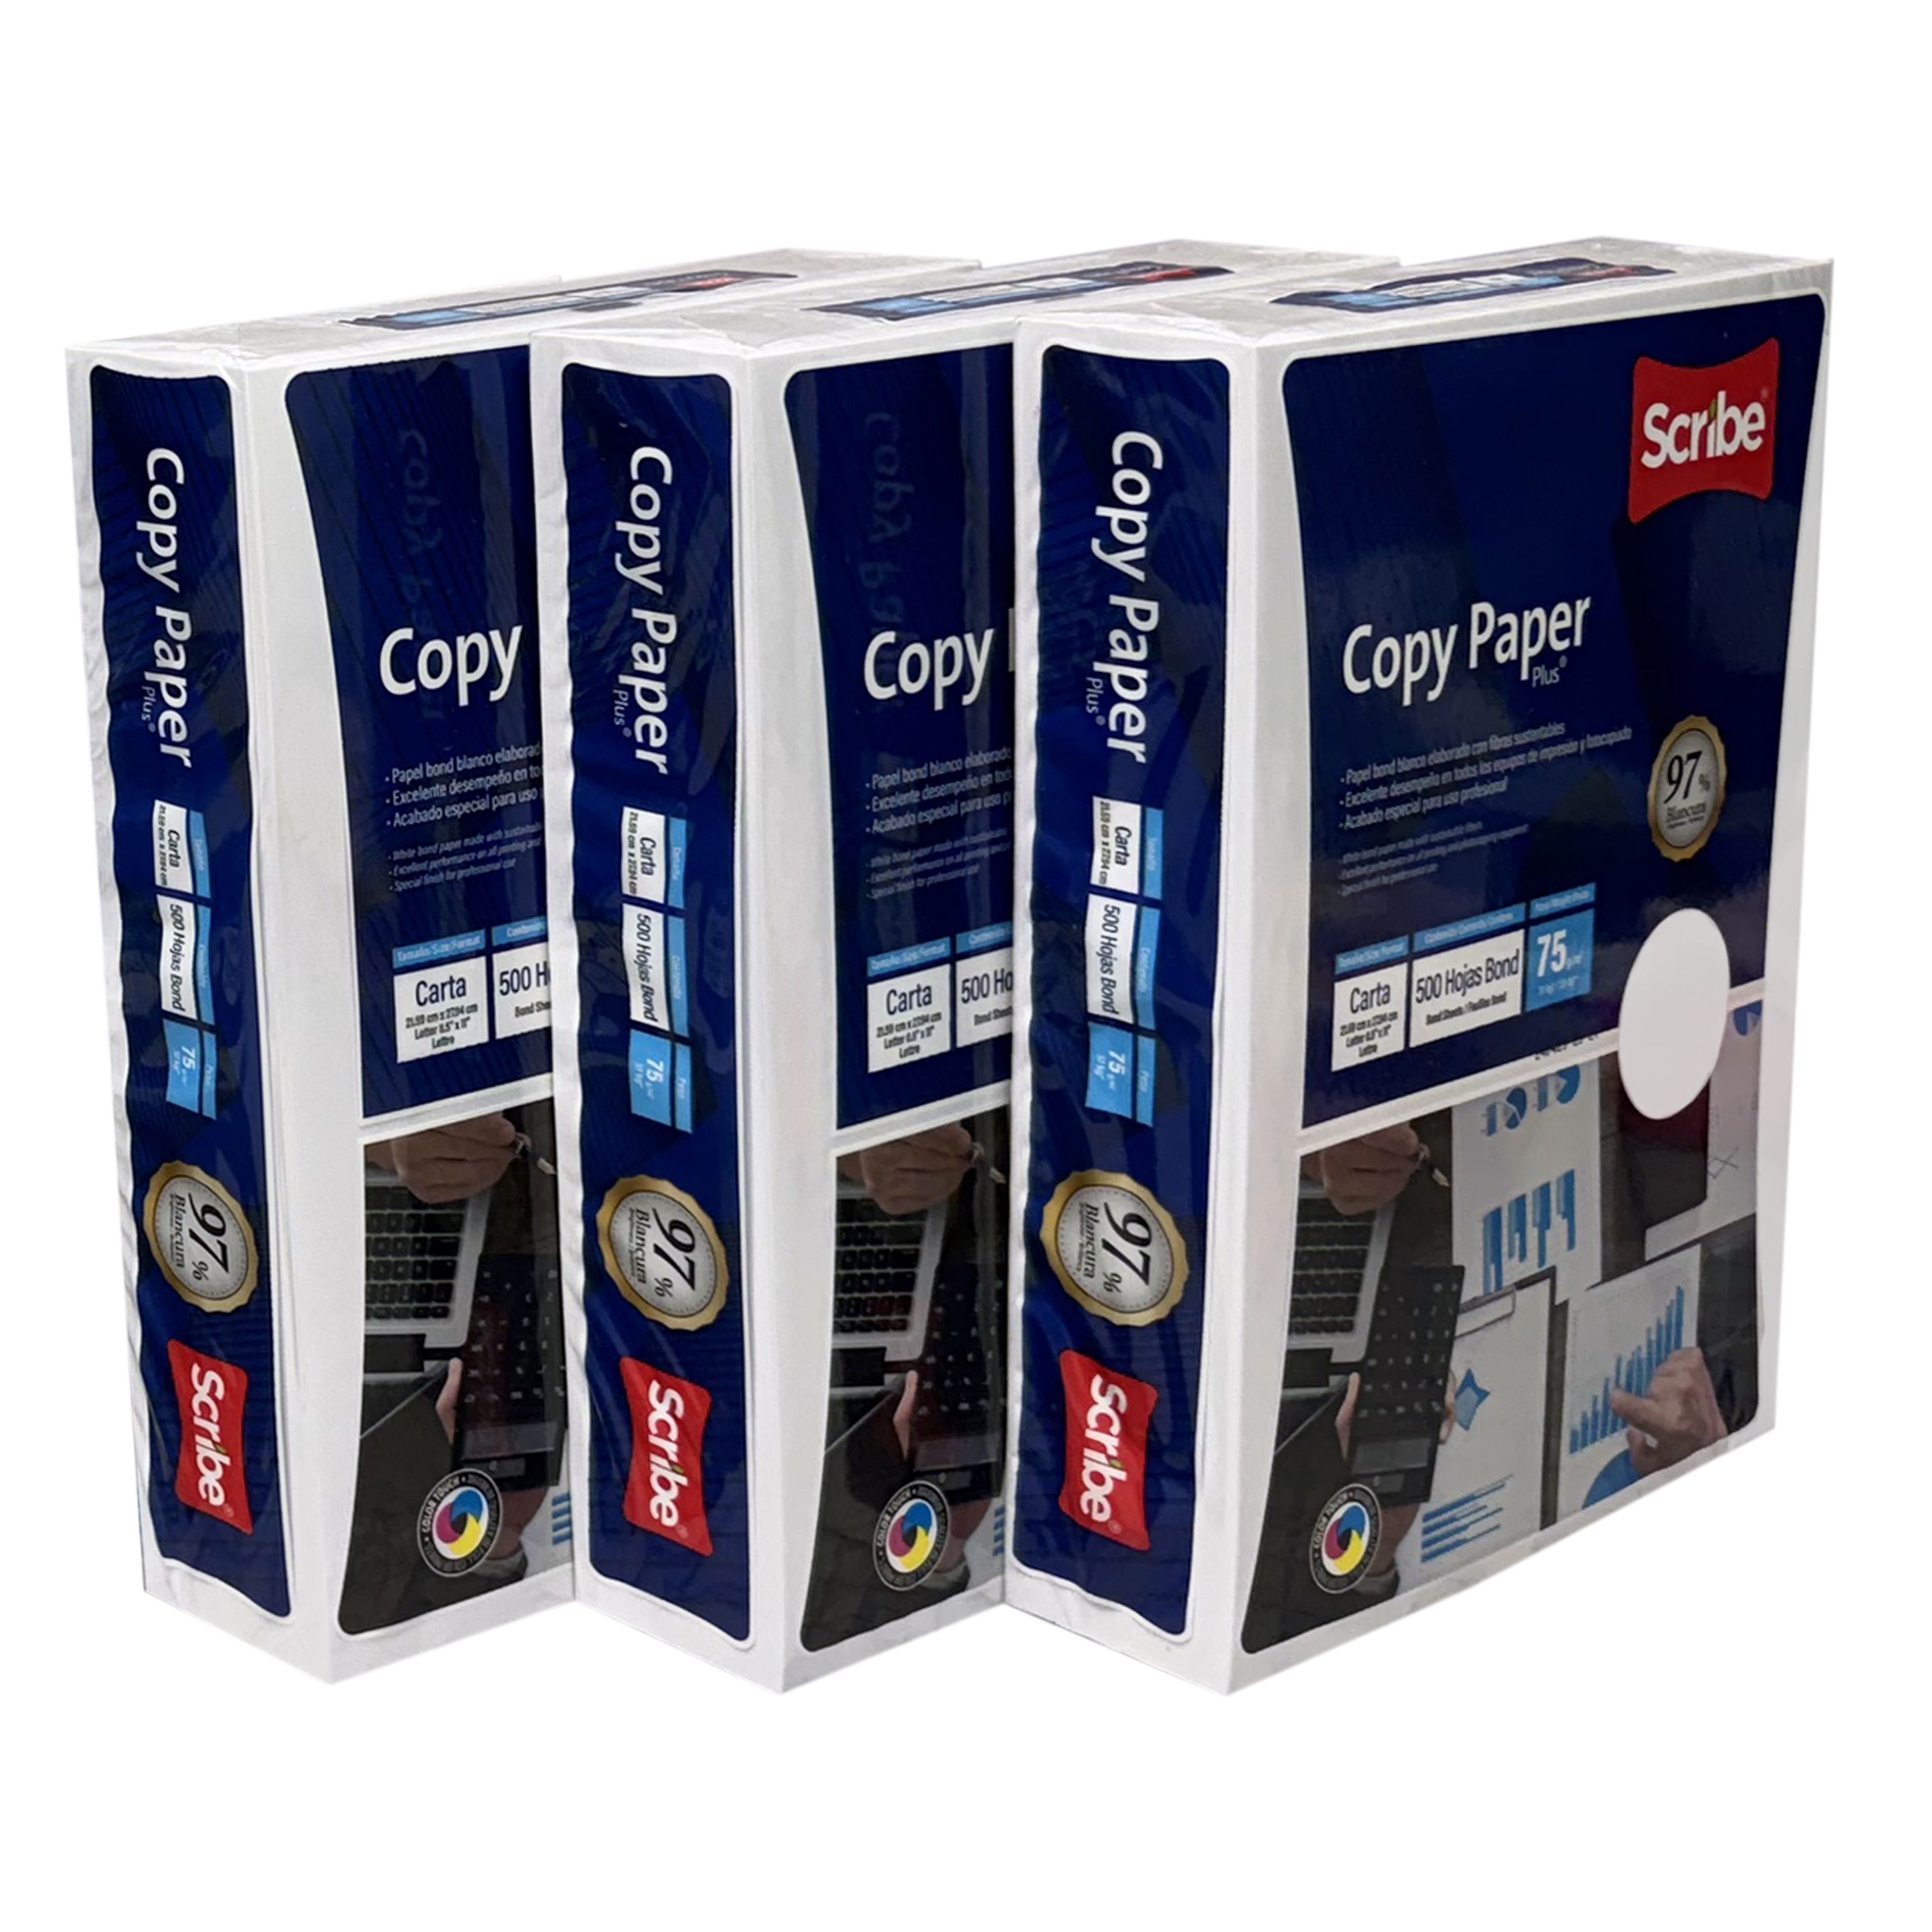 Multipurpose Copy Printer Paper, 8.5-x-11-inch, 24lb, 3 Ream 1,500